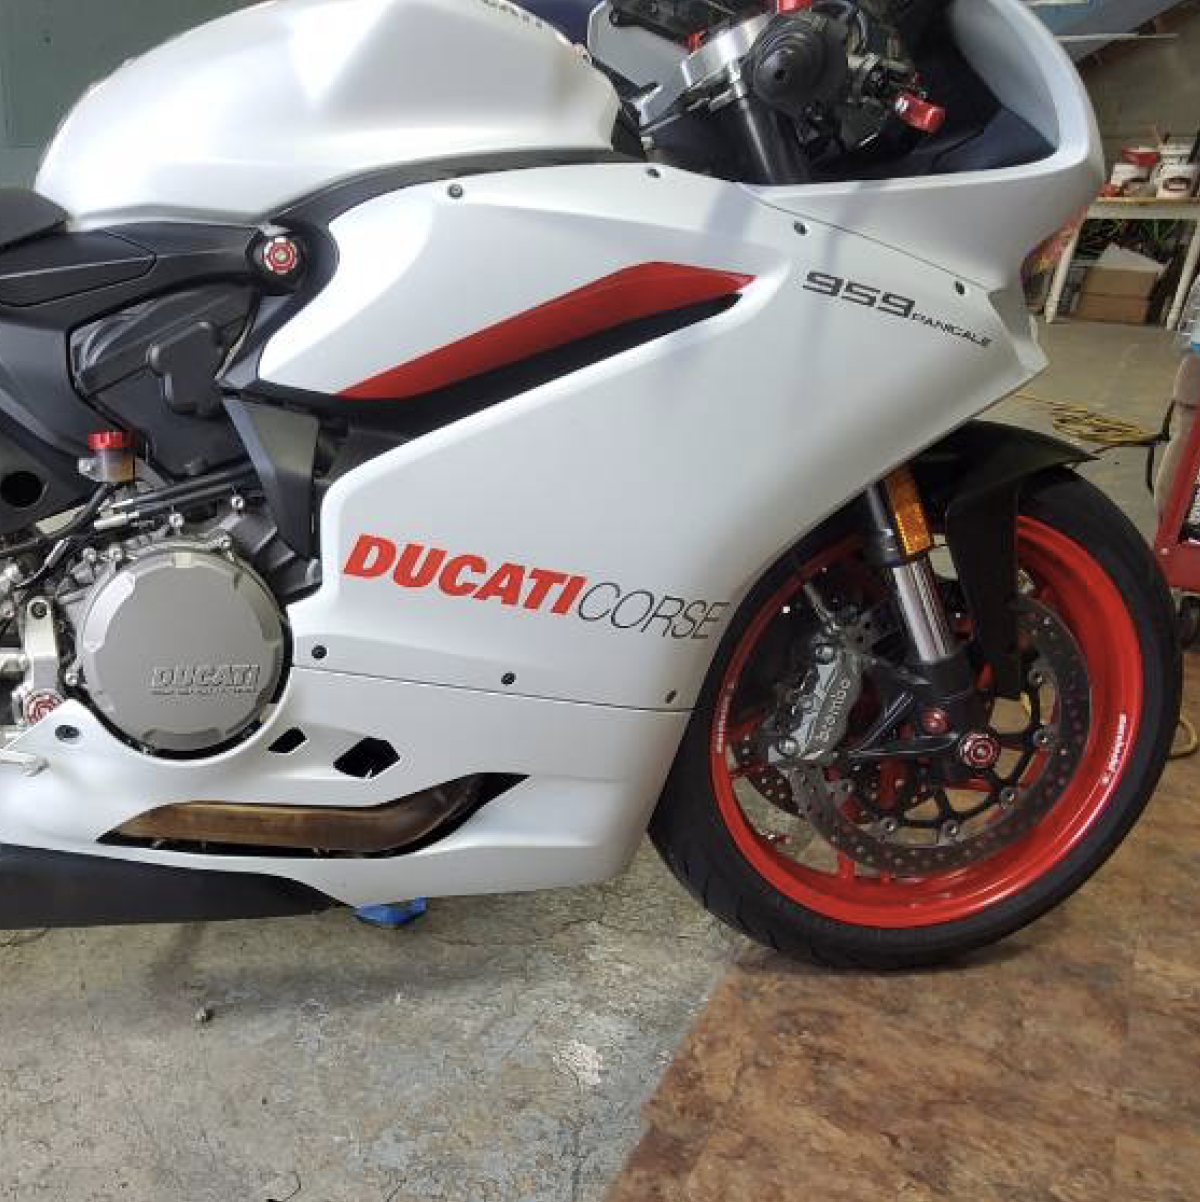 White Ducati corse with a partial wrap